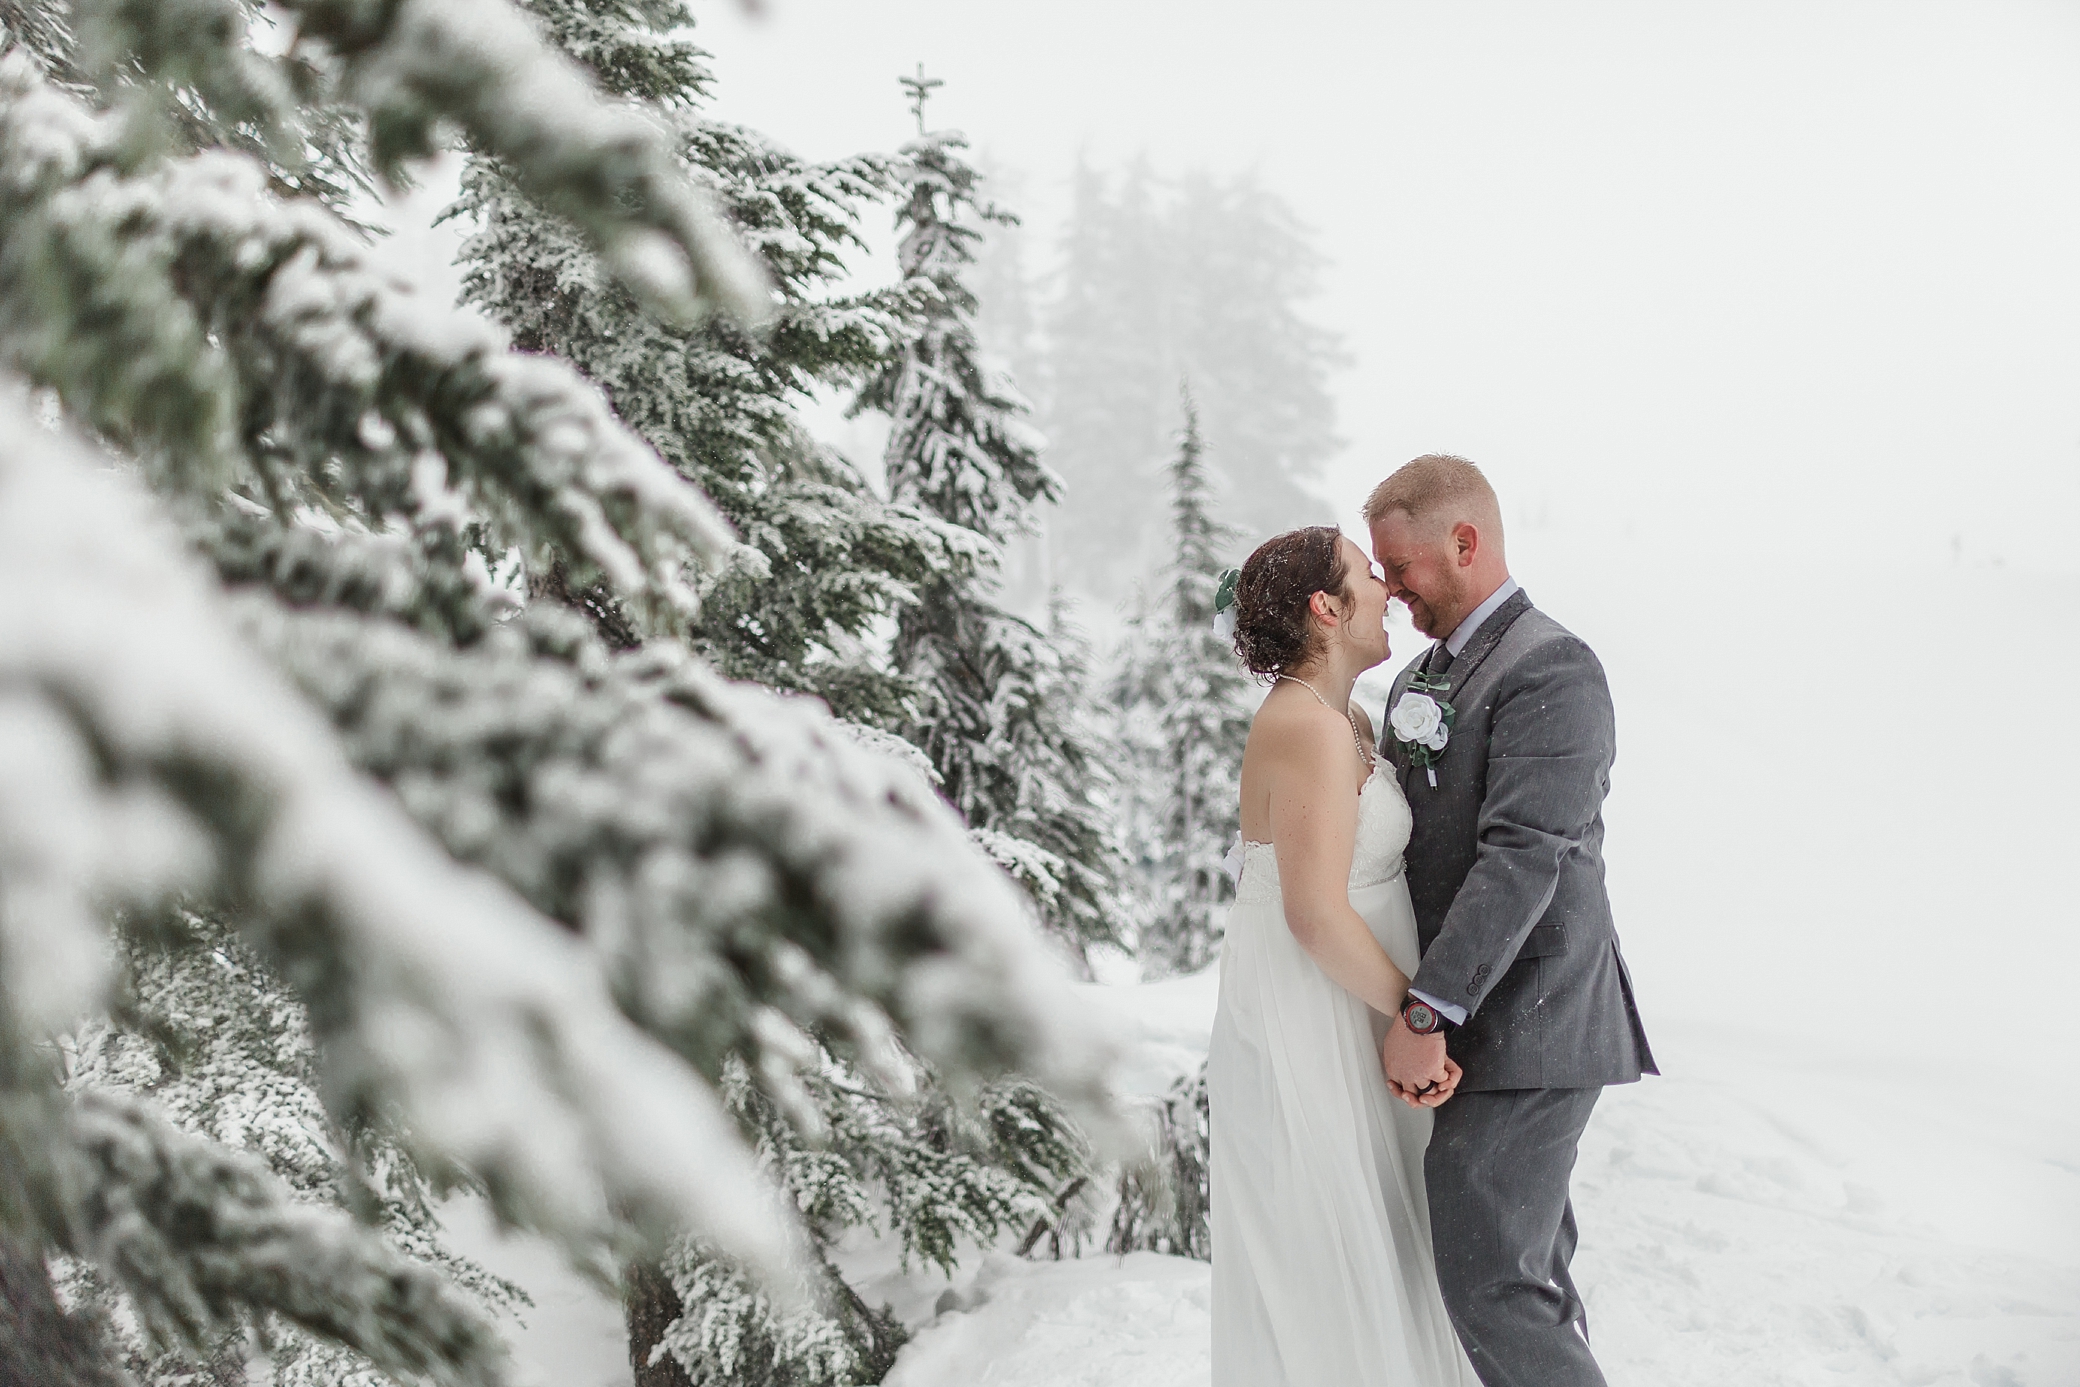 Snowy Mount Baker Elopement | Megan Montalvo Photography 